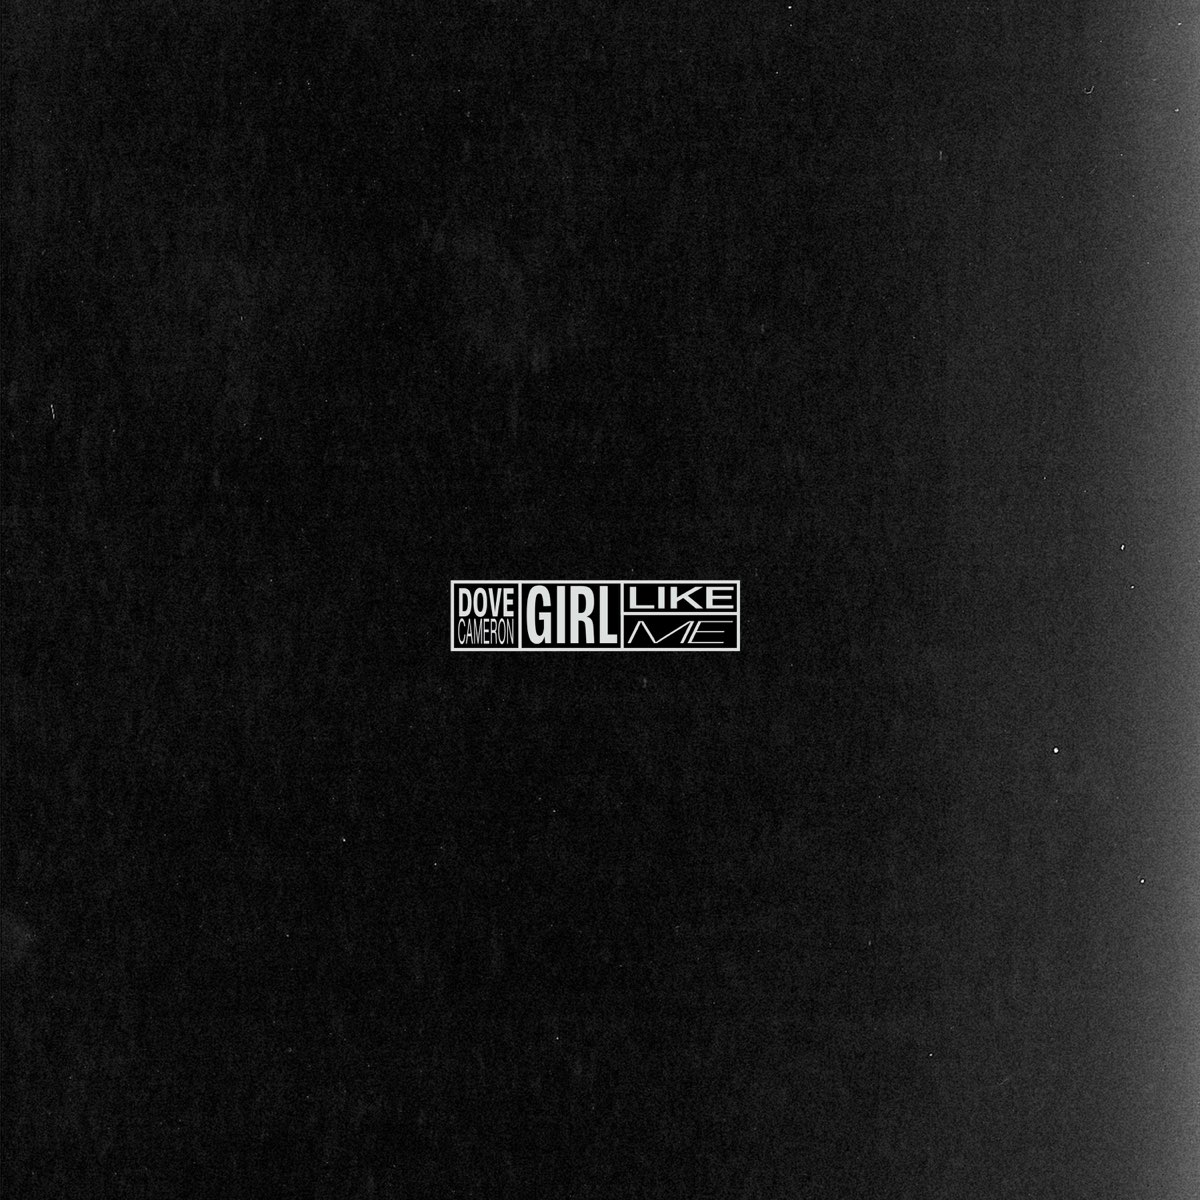 ‎girl Like Me Single By Dove Cameron On Apple Music 0165